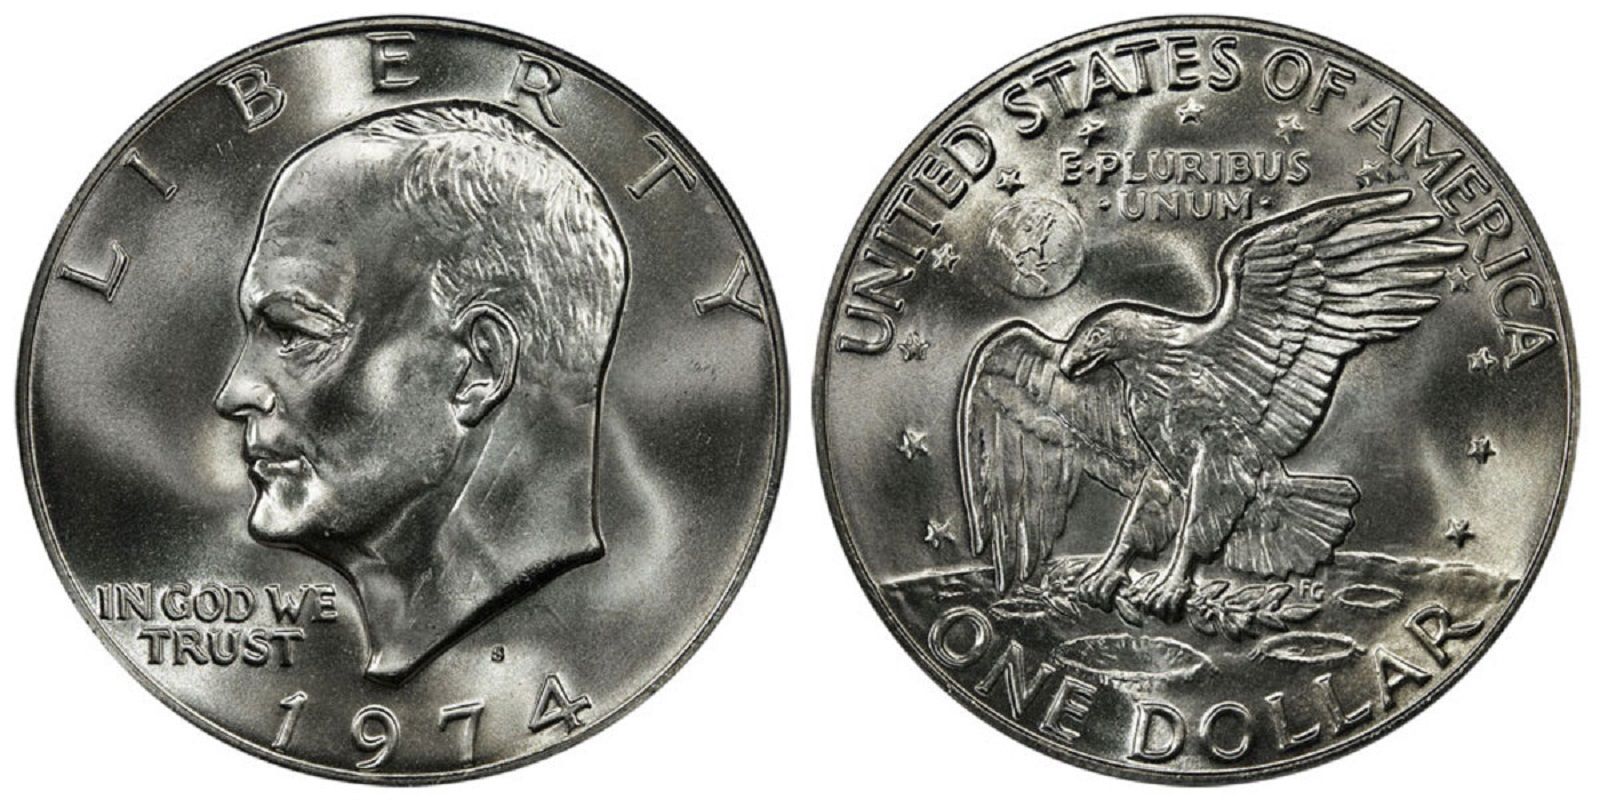 Купить монеты доллары сша. США 1 доллар 1974 Эйзенхауэр. Монета 1 доллар Дуайт Эйзенхауэр серебро. Монета Liberty 1974. Монета 1 доллар США Либерти.